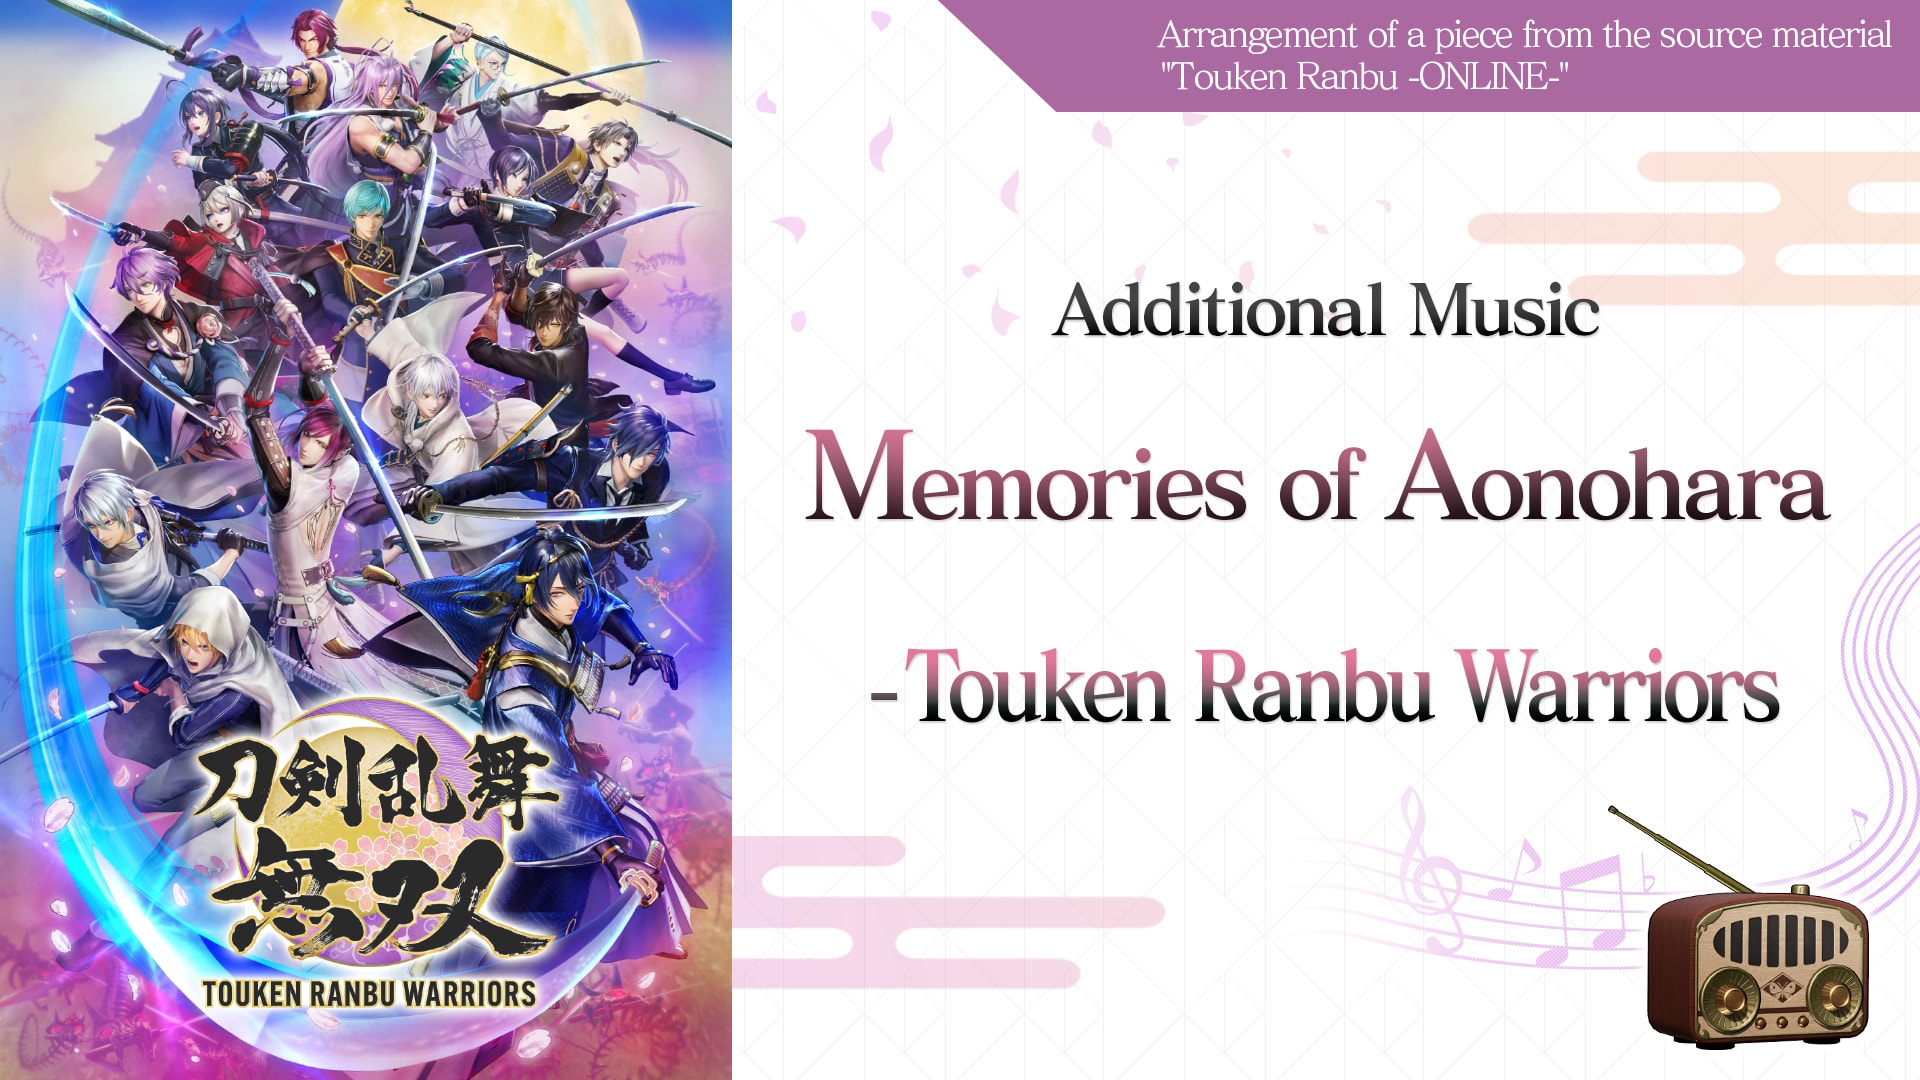 Additional Music "Memories of Aonohara - Touken Ranbu Warriors"